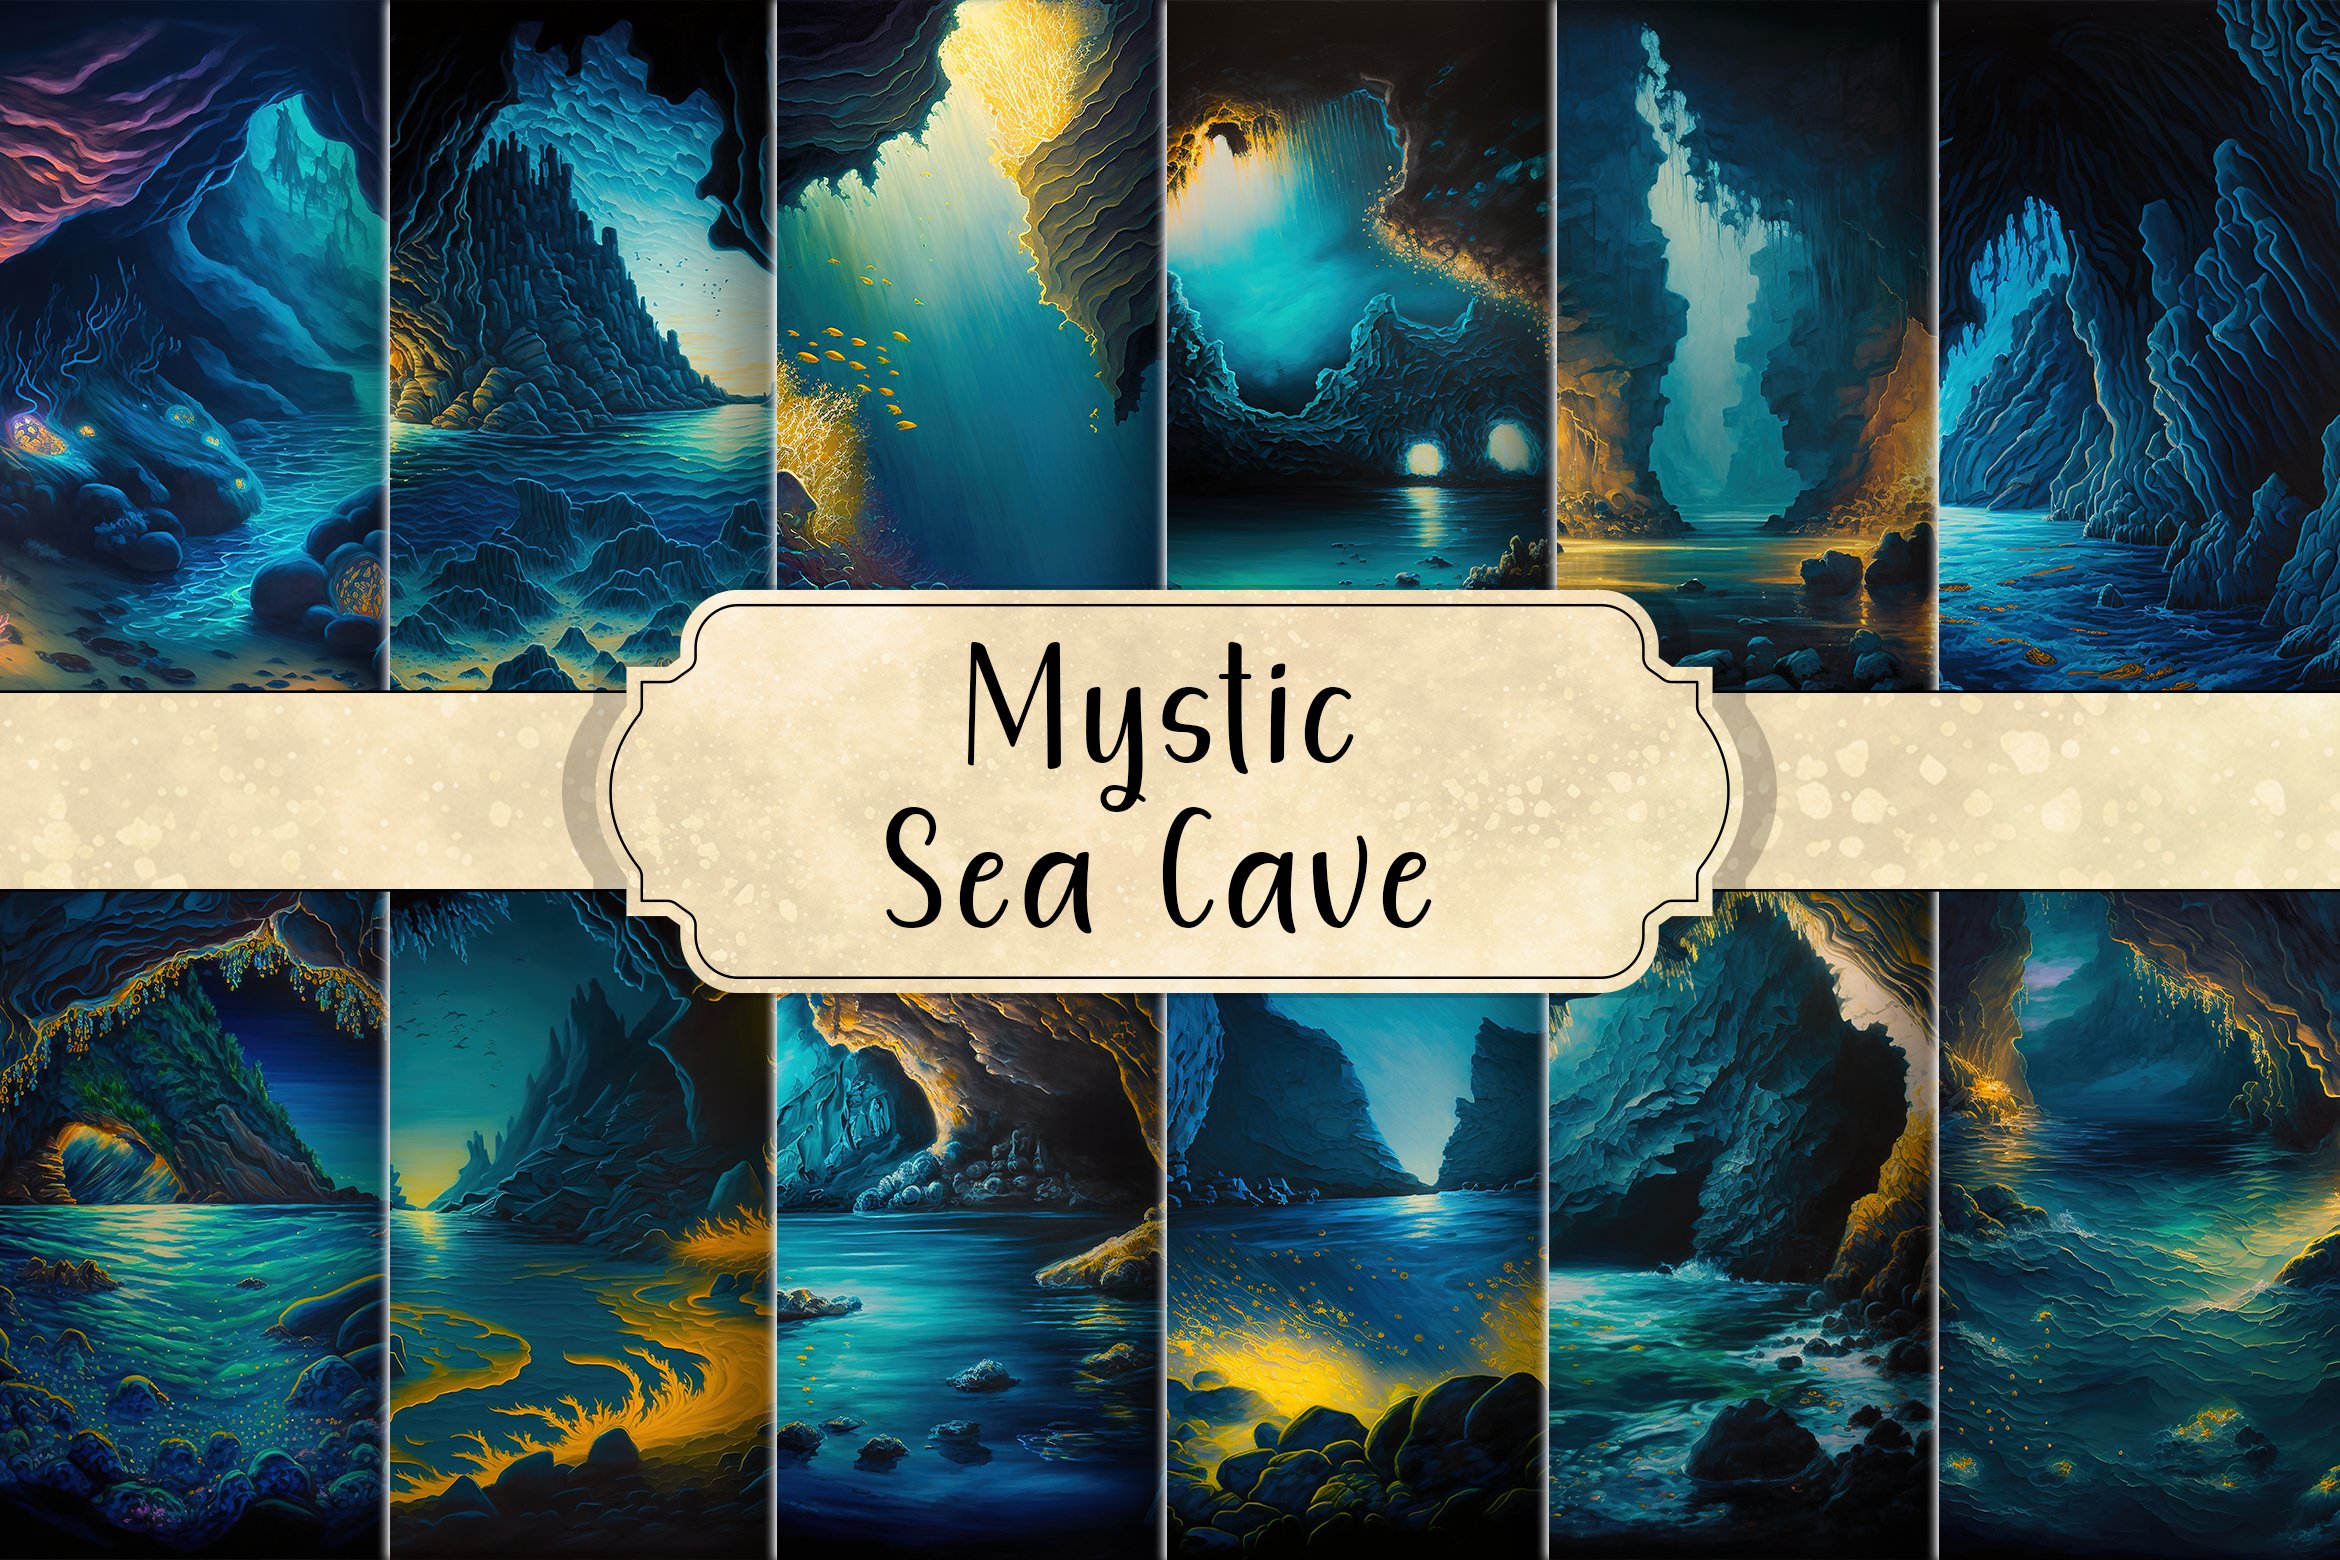 Mystic Sea Cave cover image.